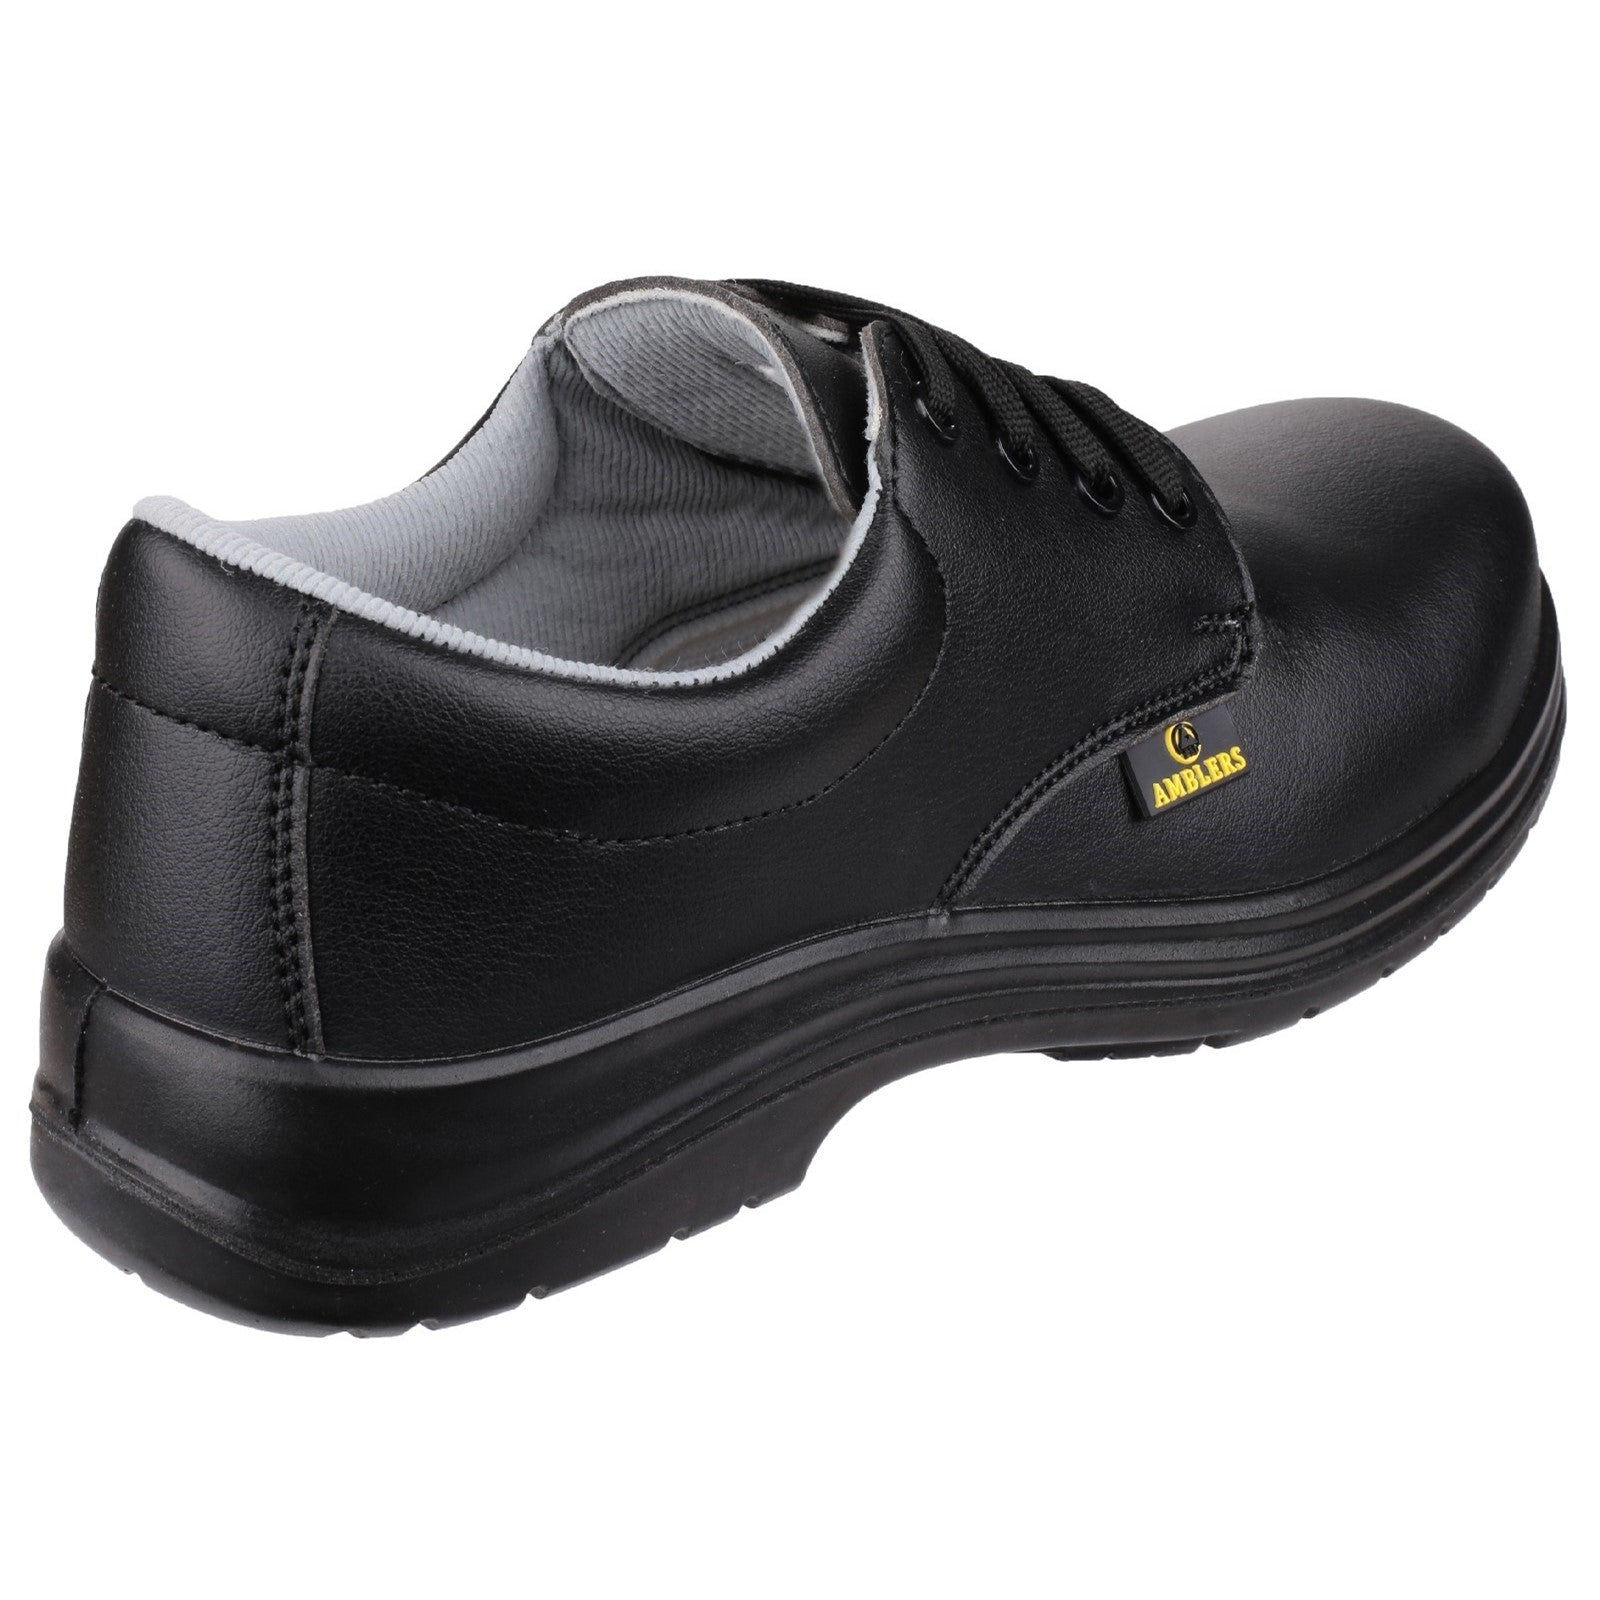 Amblers FS662 Safety Shoe